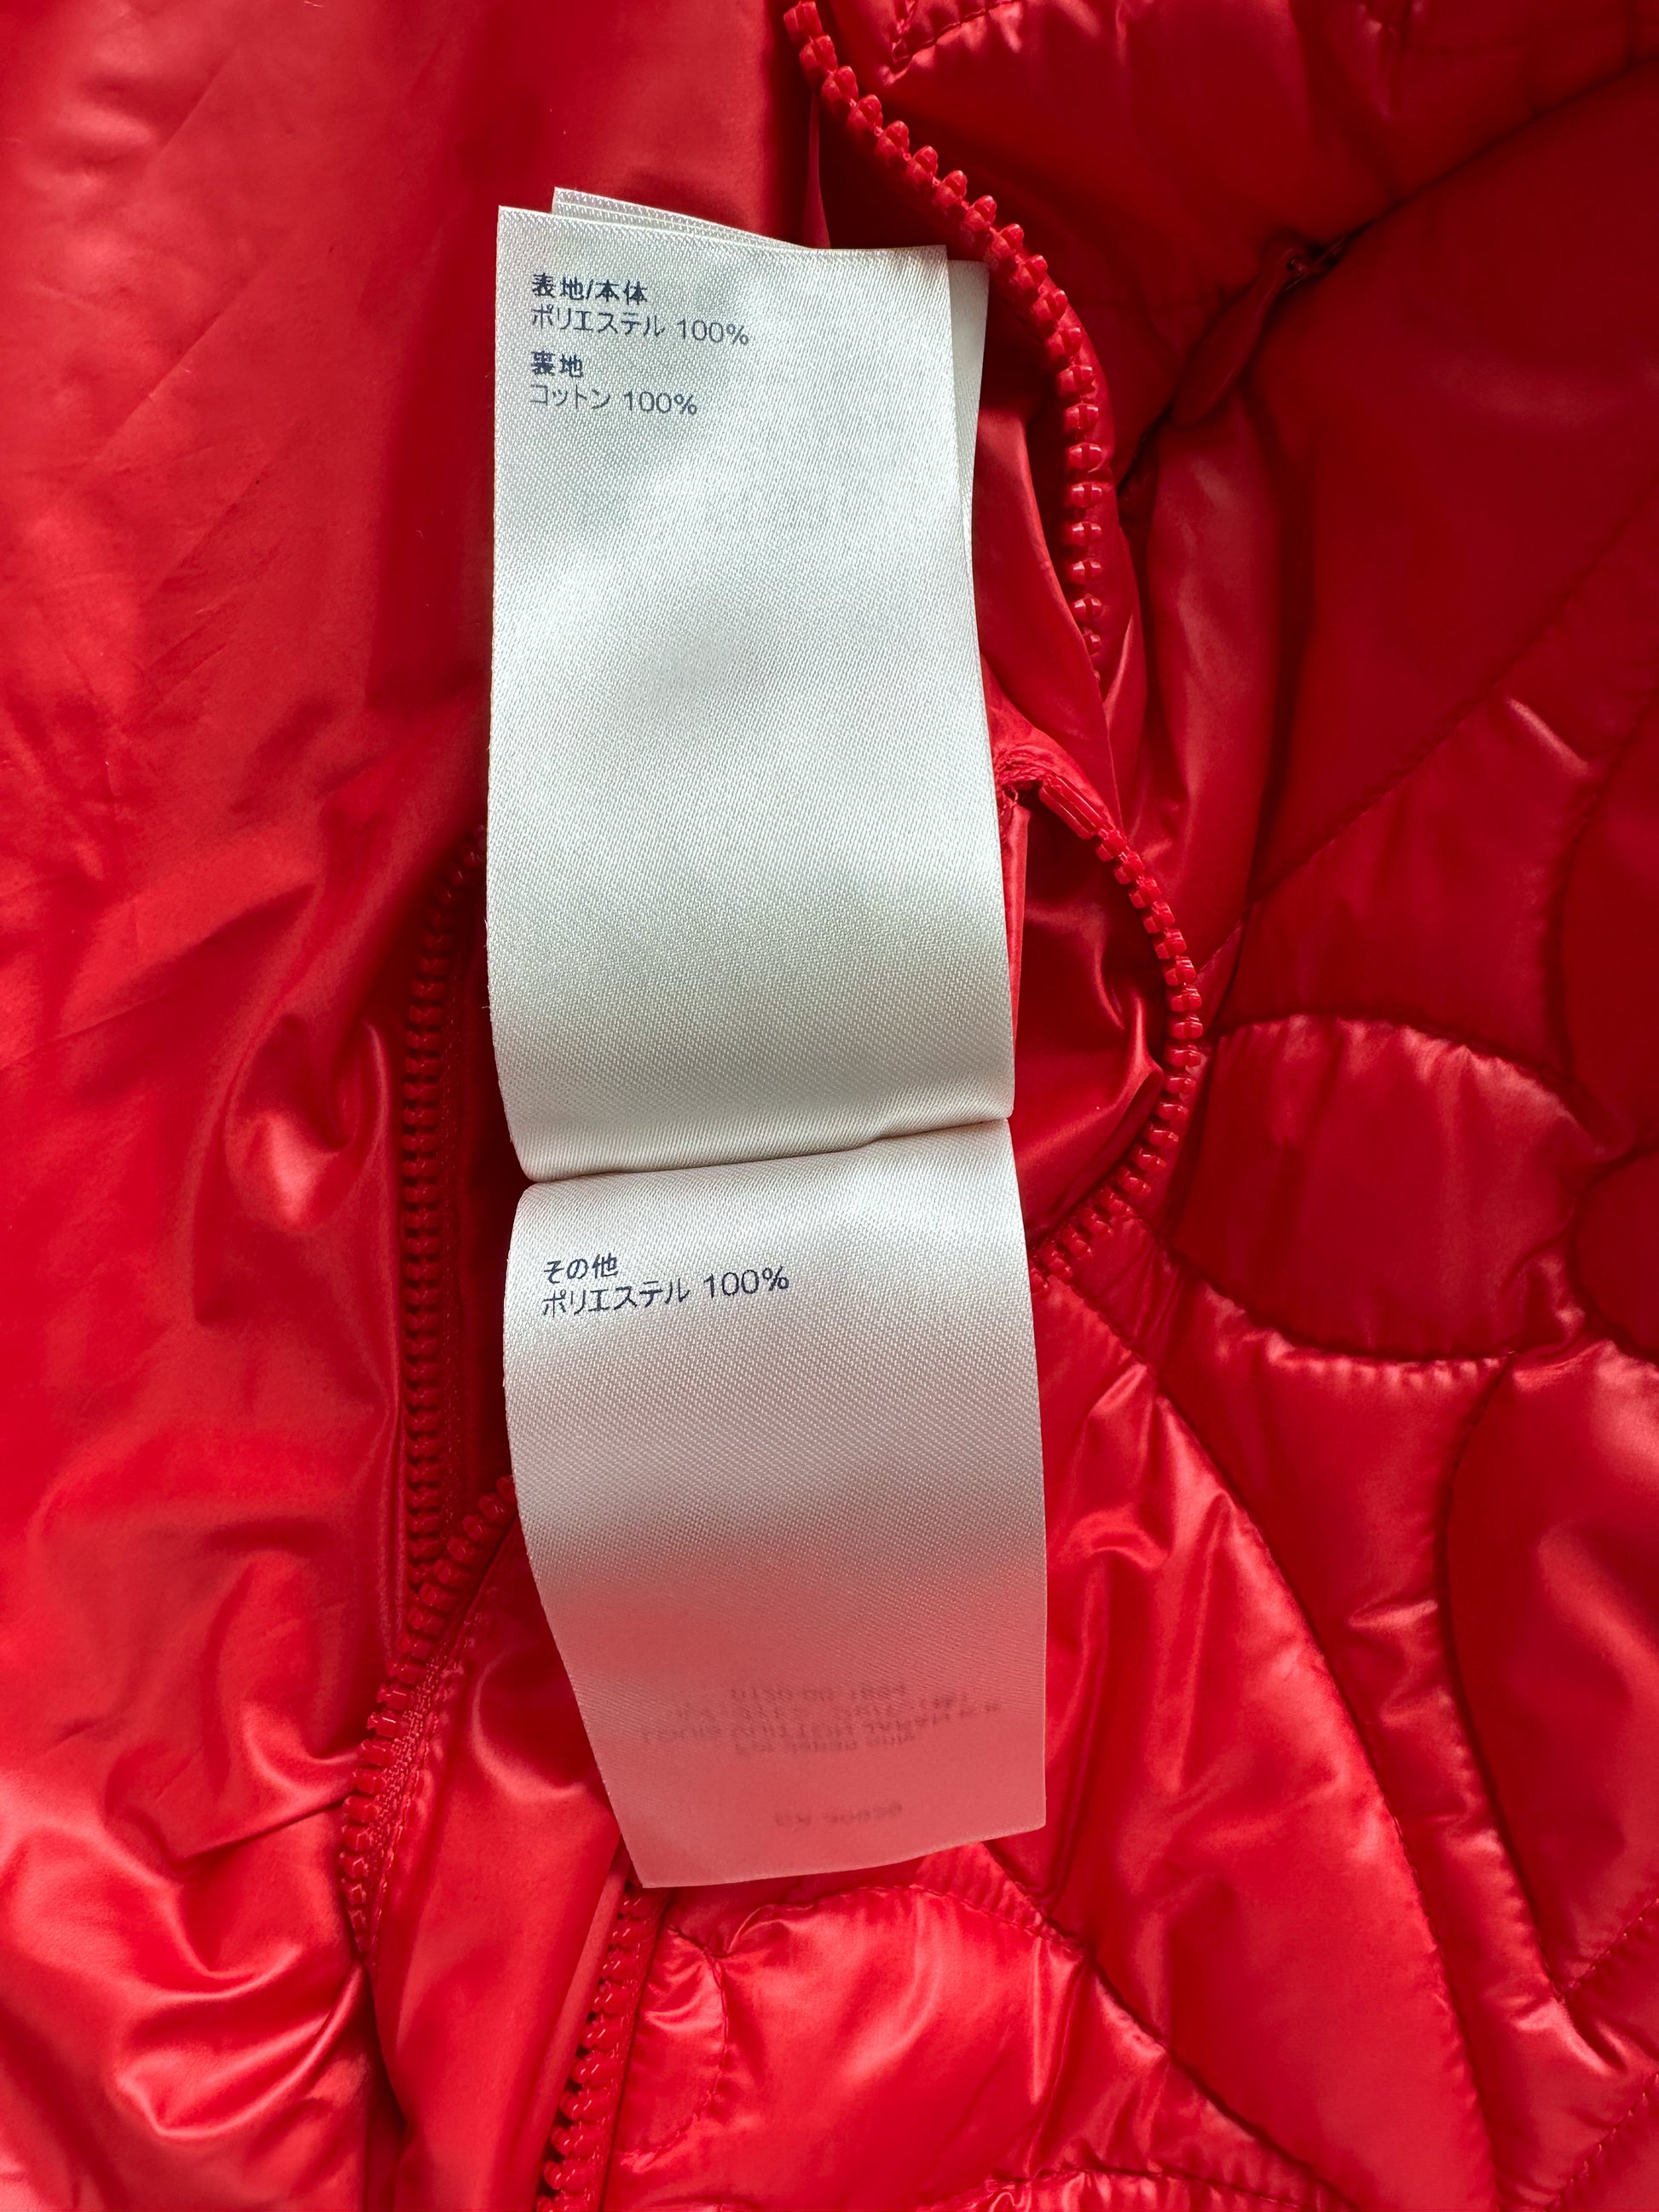 Louis Vuitton Technical Mirror Puffer Jacket Red Men's - FW21 - US